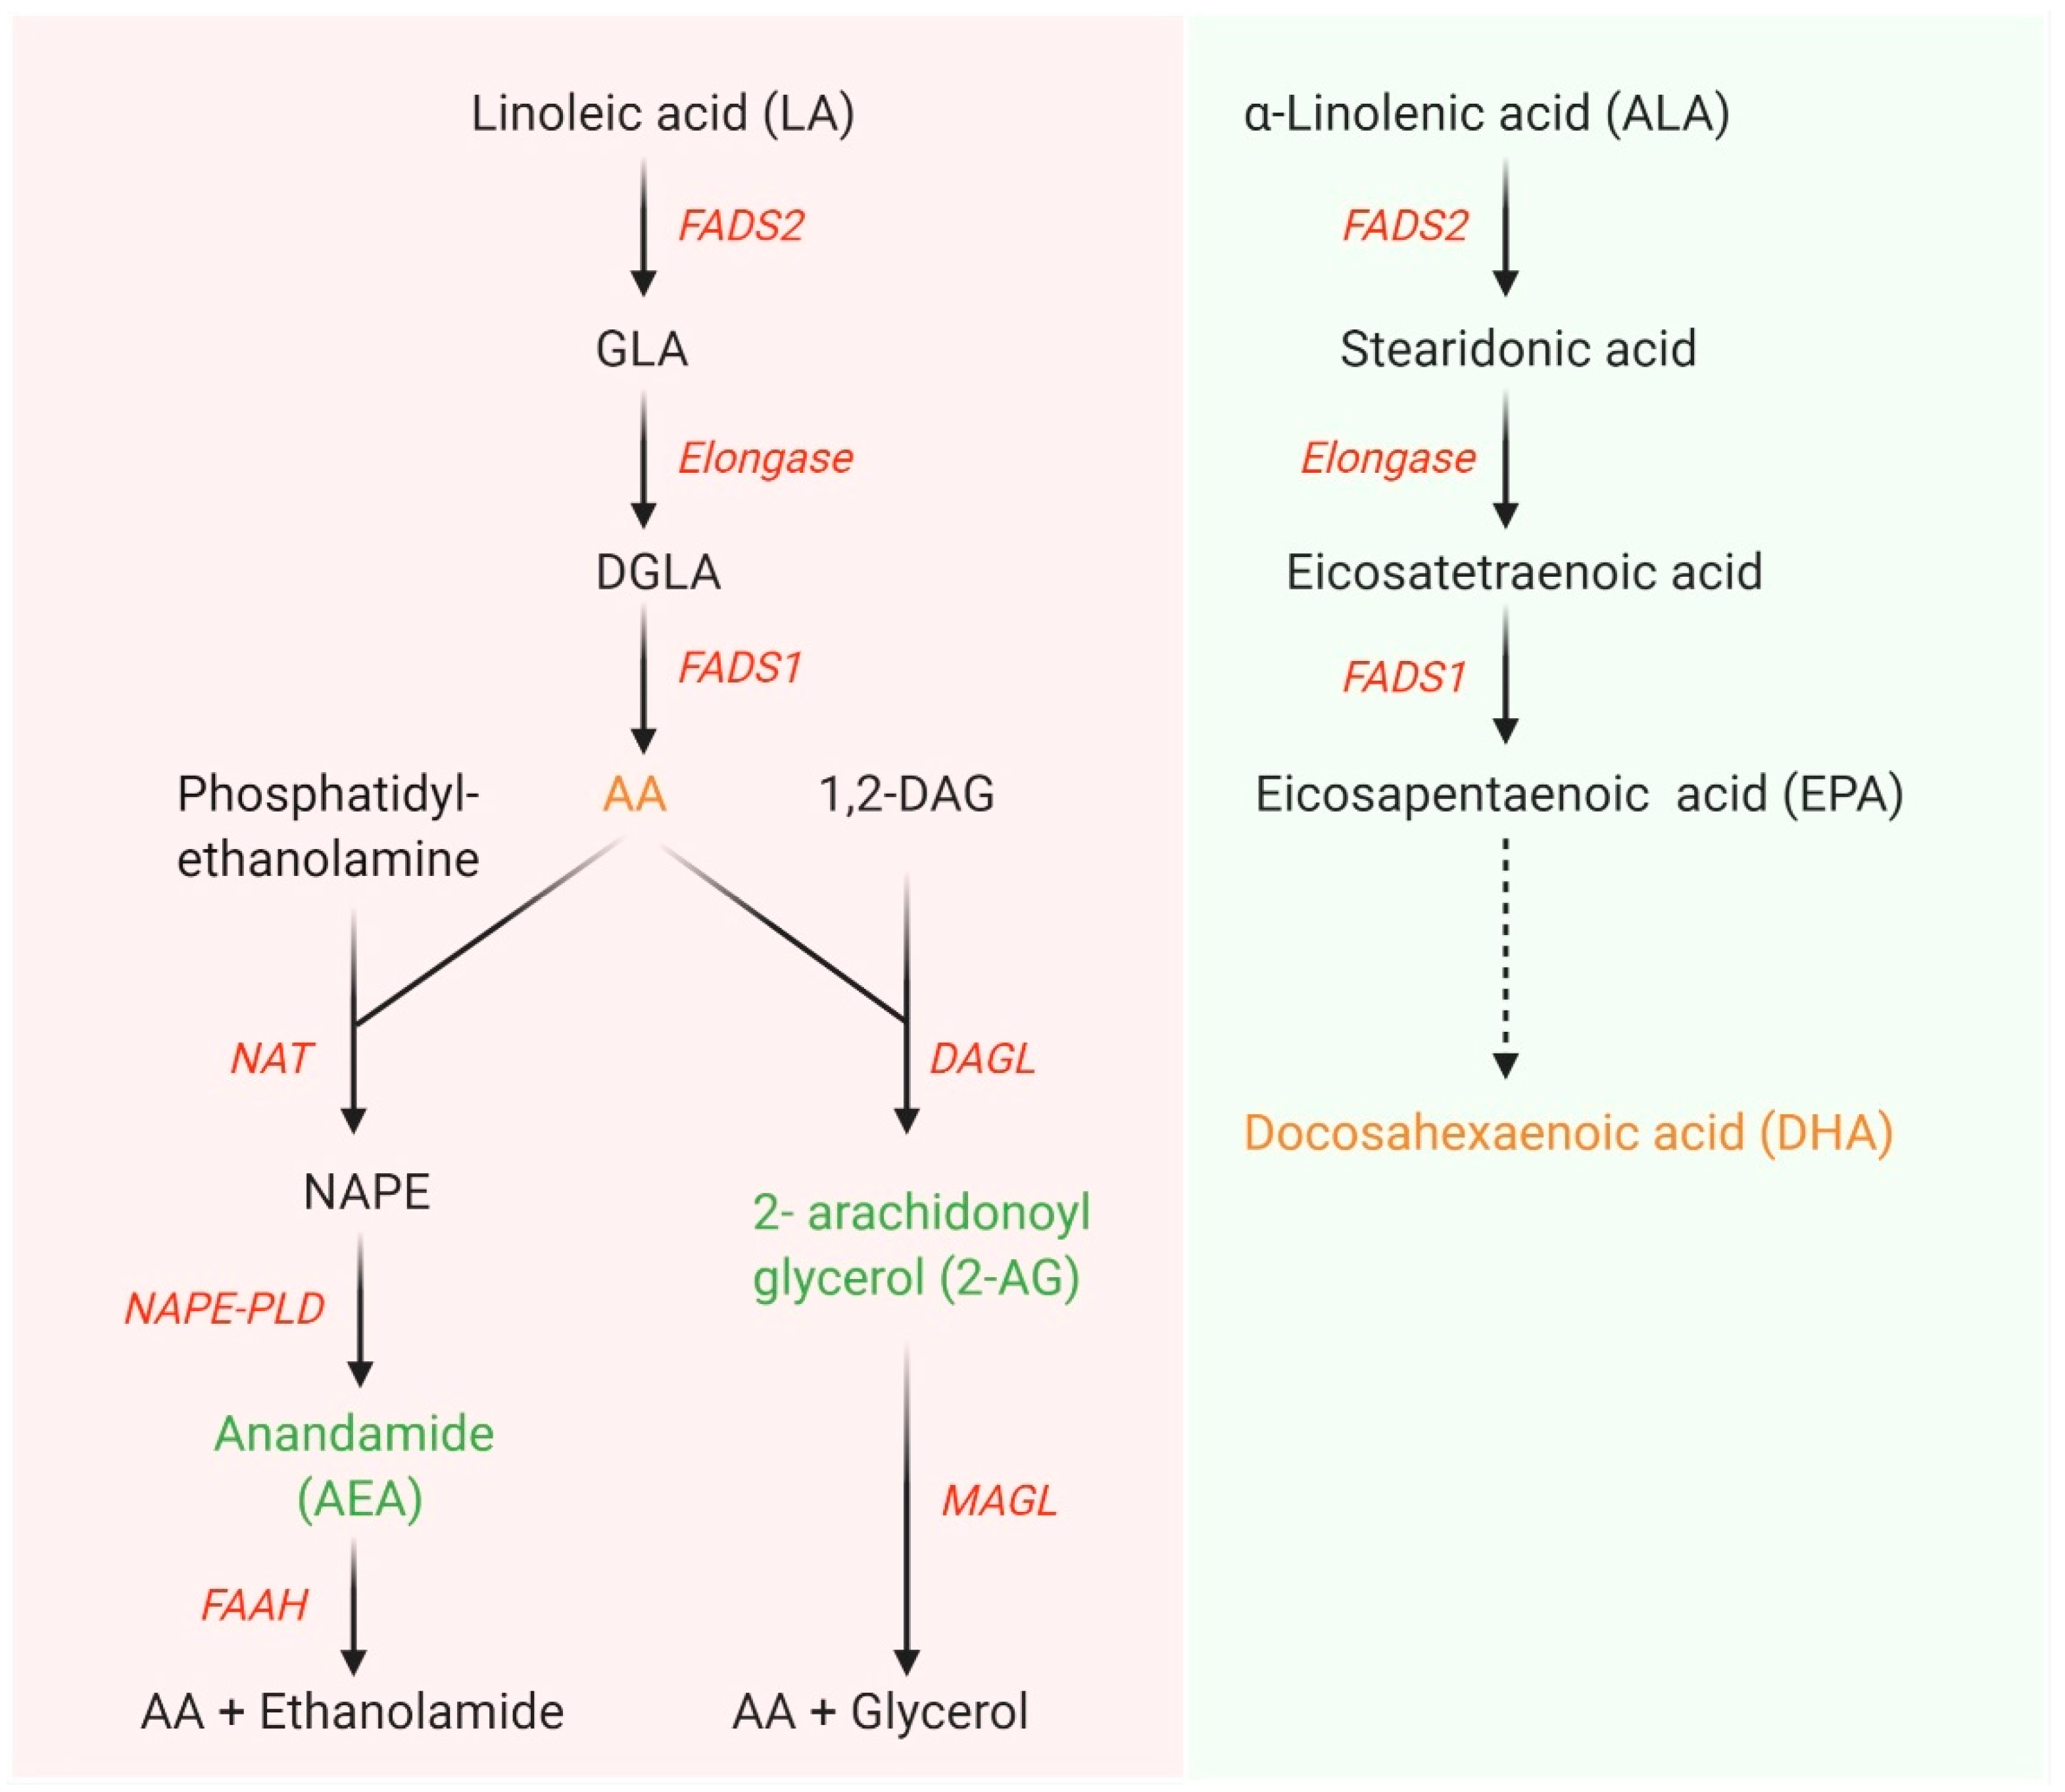 linolenic acid vs linoleic acid